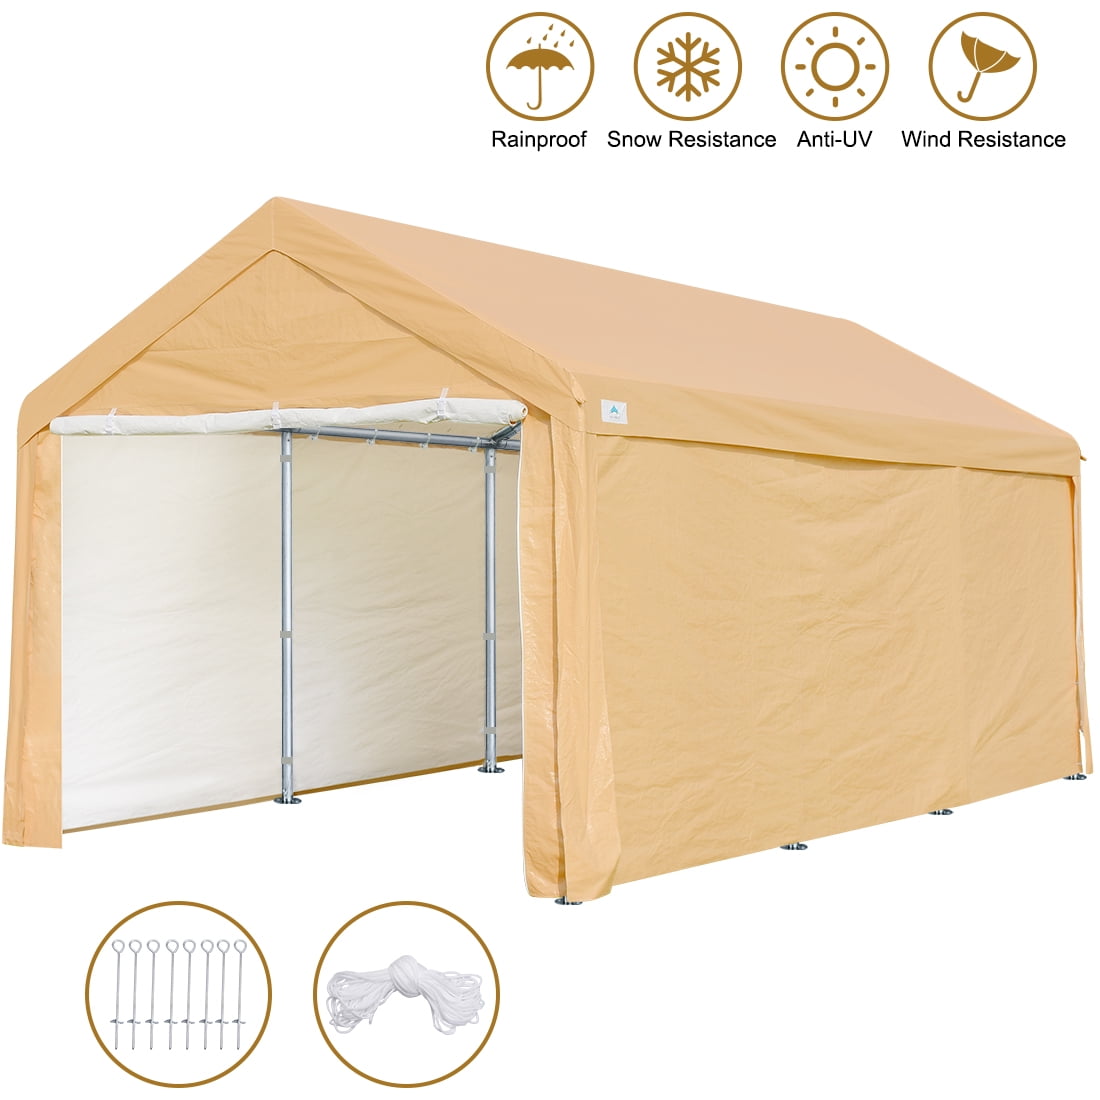 Advance Outdoor 10x20 Ft Heavy Duty Carport Car Canopy Garage Shelter Boat Tent With Removable Sidewalls And Doors Beige Walmart Com Walmart Com